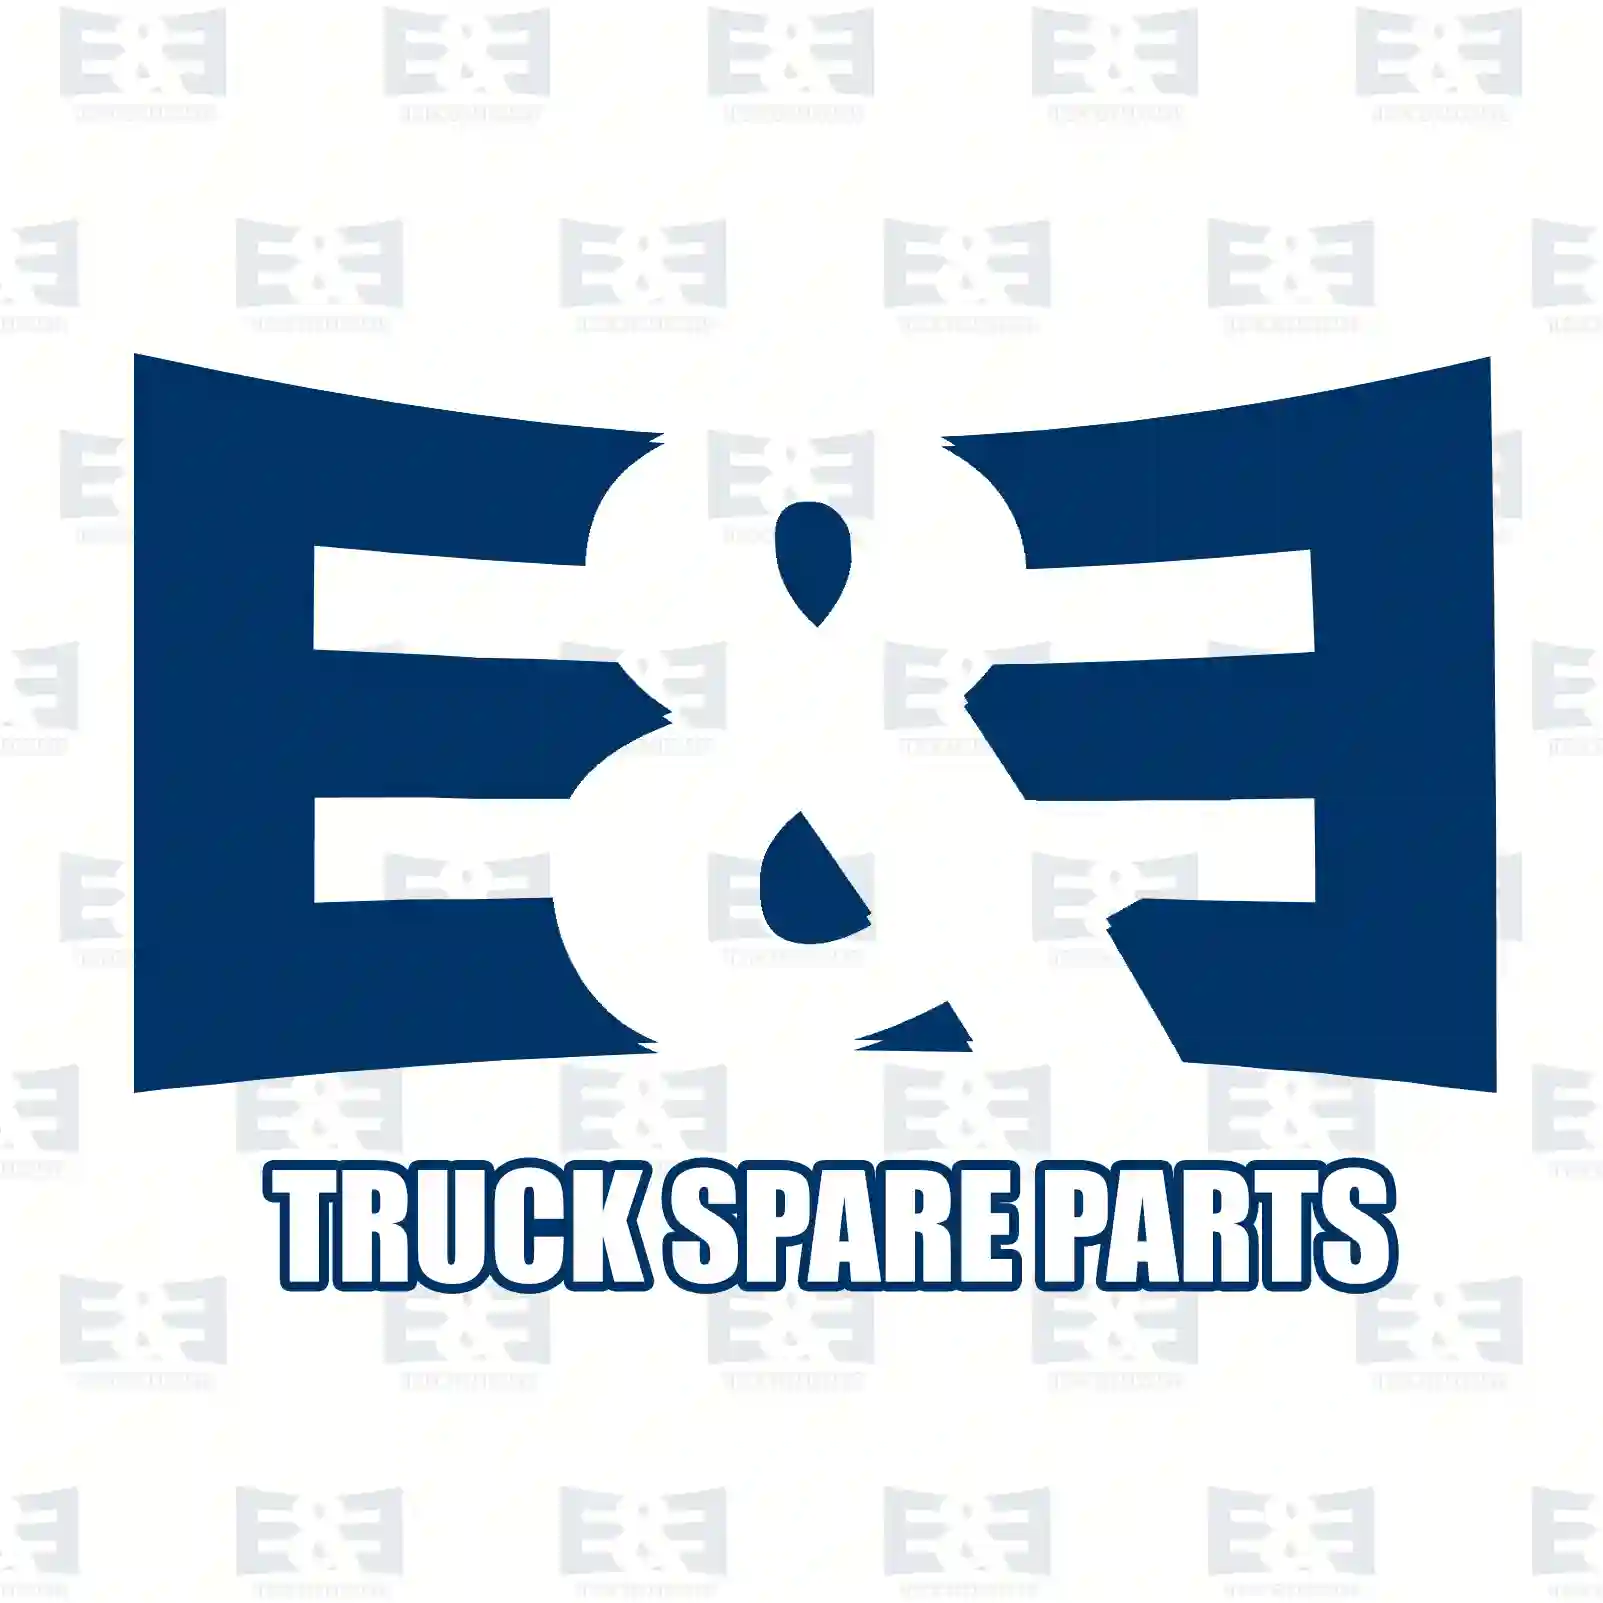 Drum brake lining kit, axle kit, 2E2296233, 181814, 551029, 551039, 551059, 551066, 551075, 551102, 551114, 551120, 551154, 551170, 551170S, 551188, 552122, 751011, 751012, 751039 ||  2E2296233 E&E Truck Spare Parts | Truck Spare Parts, Auotomotive Spare Parts Drum brake lining kit, axle kit, 2E2296233, 181814, 551029, 551039, 551059, 551066, 551075, 551102, 551114, 551120, 551154, 551170, 551170S, 551188, 552122, 751011, 751012, 751039 ||  2E2296233 E&E Truck Spare Parts | Truck Spare Parts, Auotomotive Spare Parts